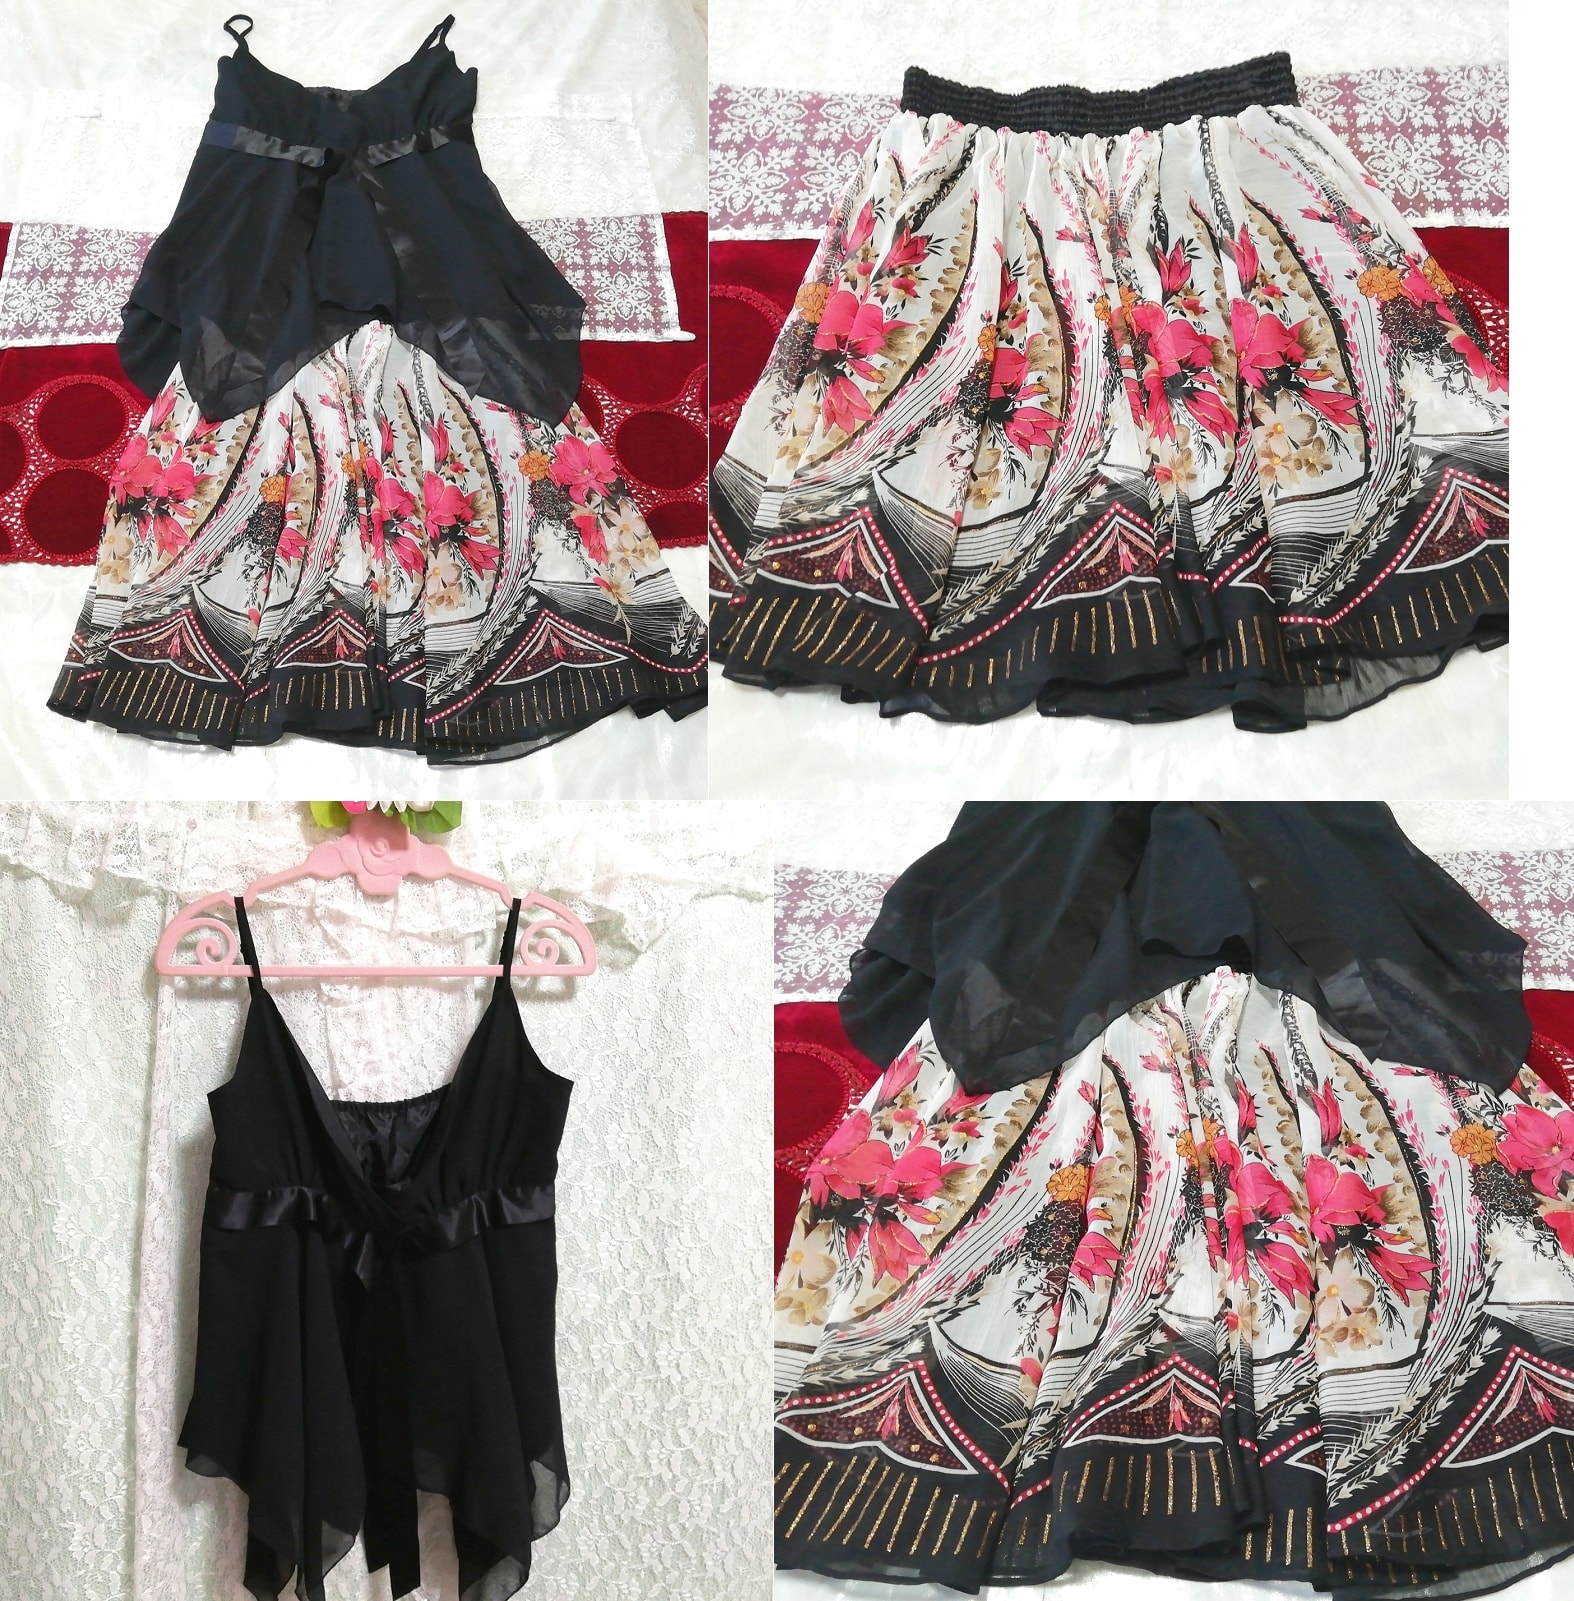 Black chiffon camisole negligee nightgown nightwear floral pattern skirt dress 2P, fashion, ladies' fashion, nightwear, pajamas